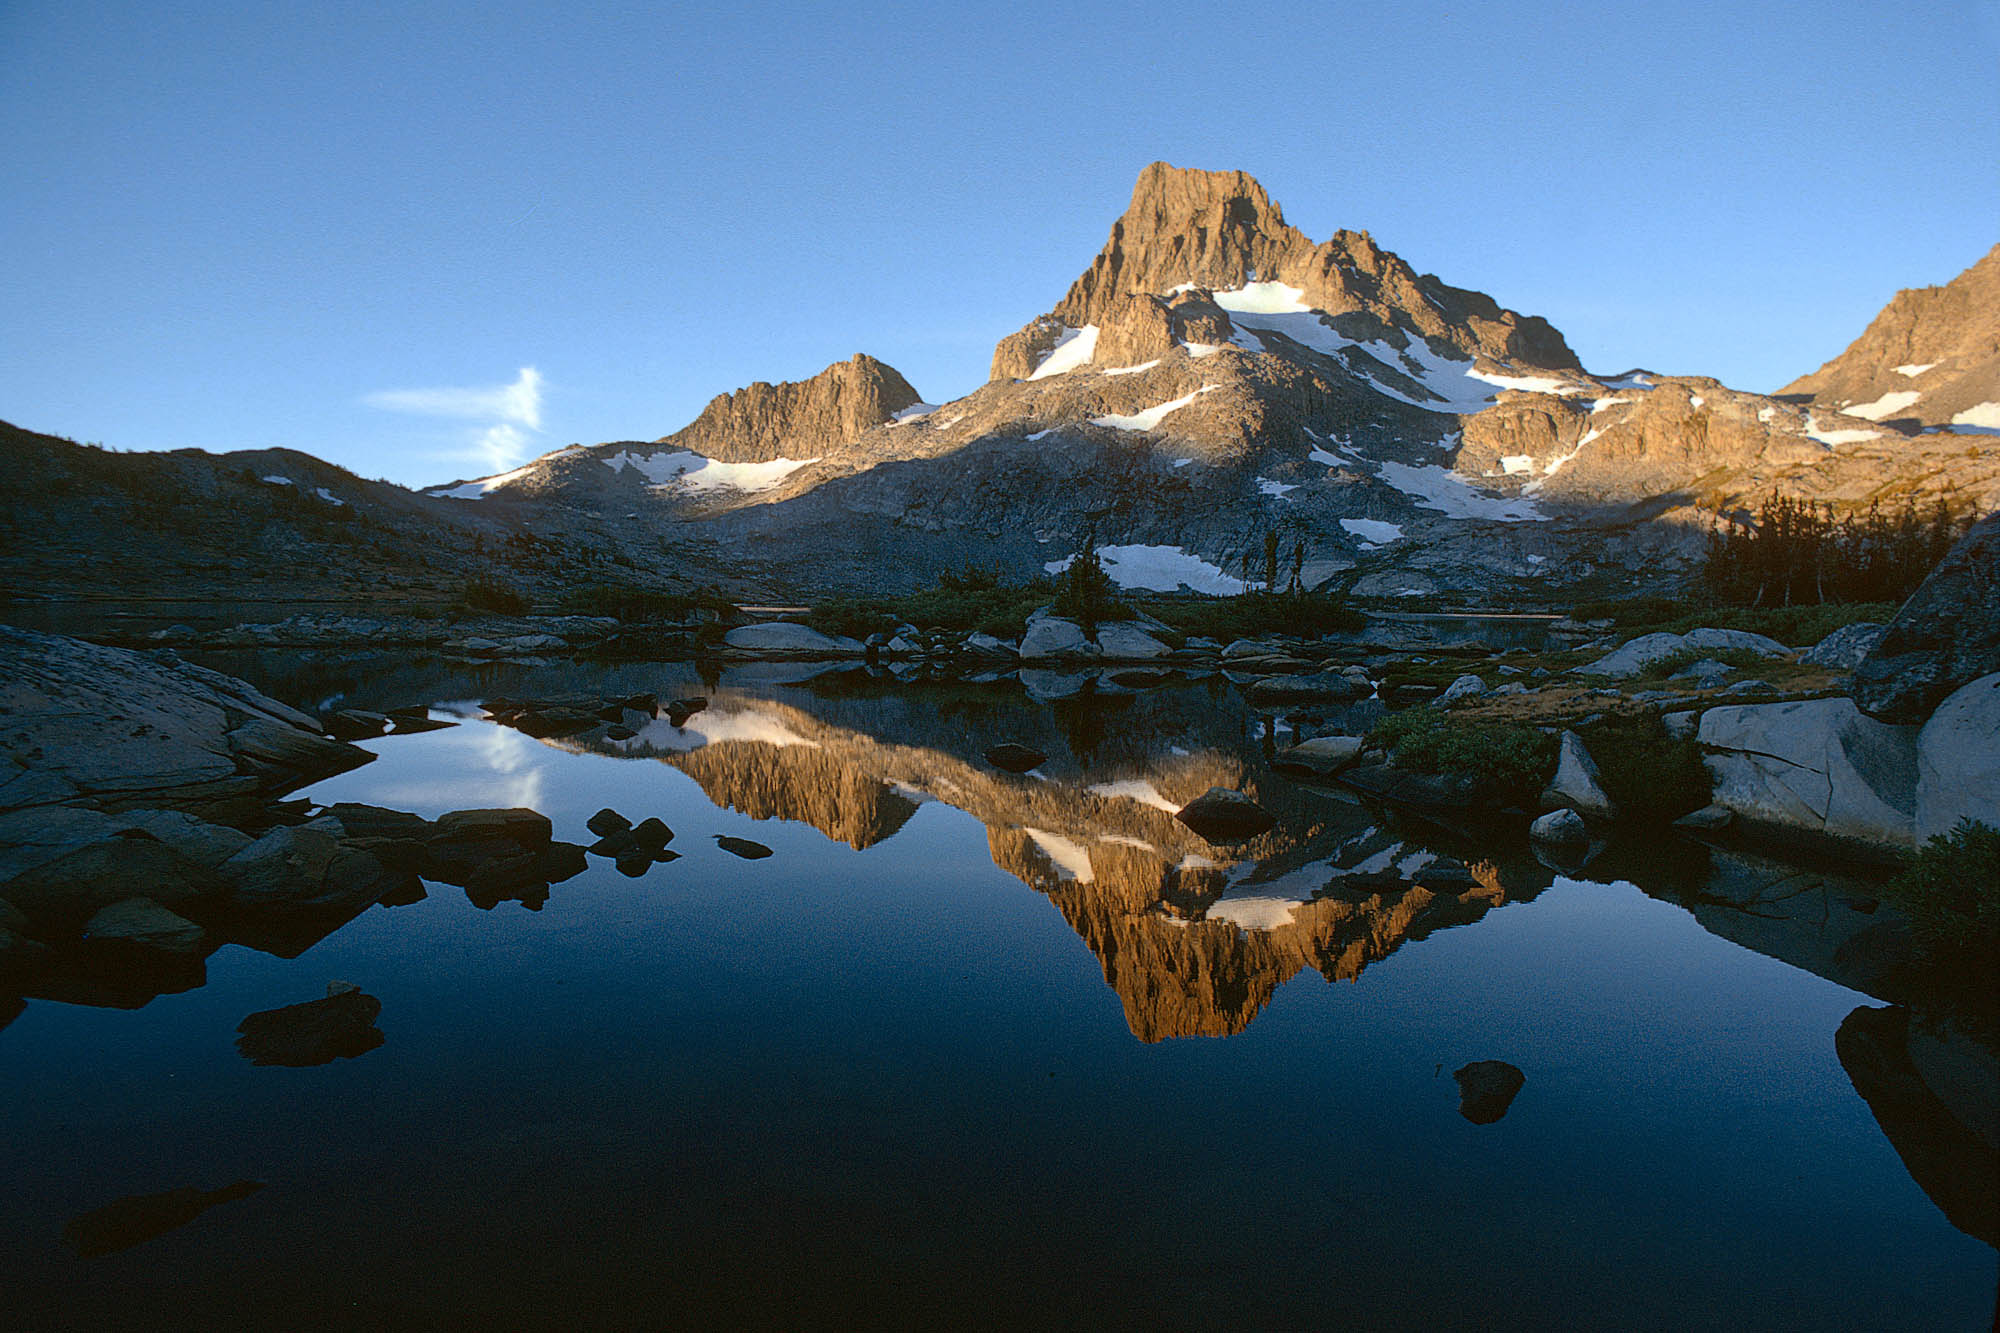 bill-hocker-thousand-island-lake-banner-peak-high-sierra-california-1979